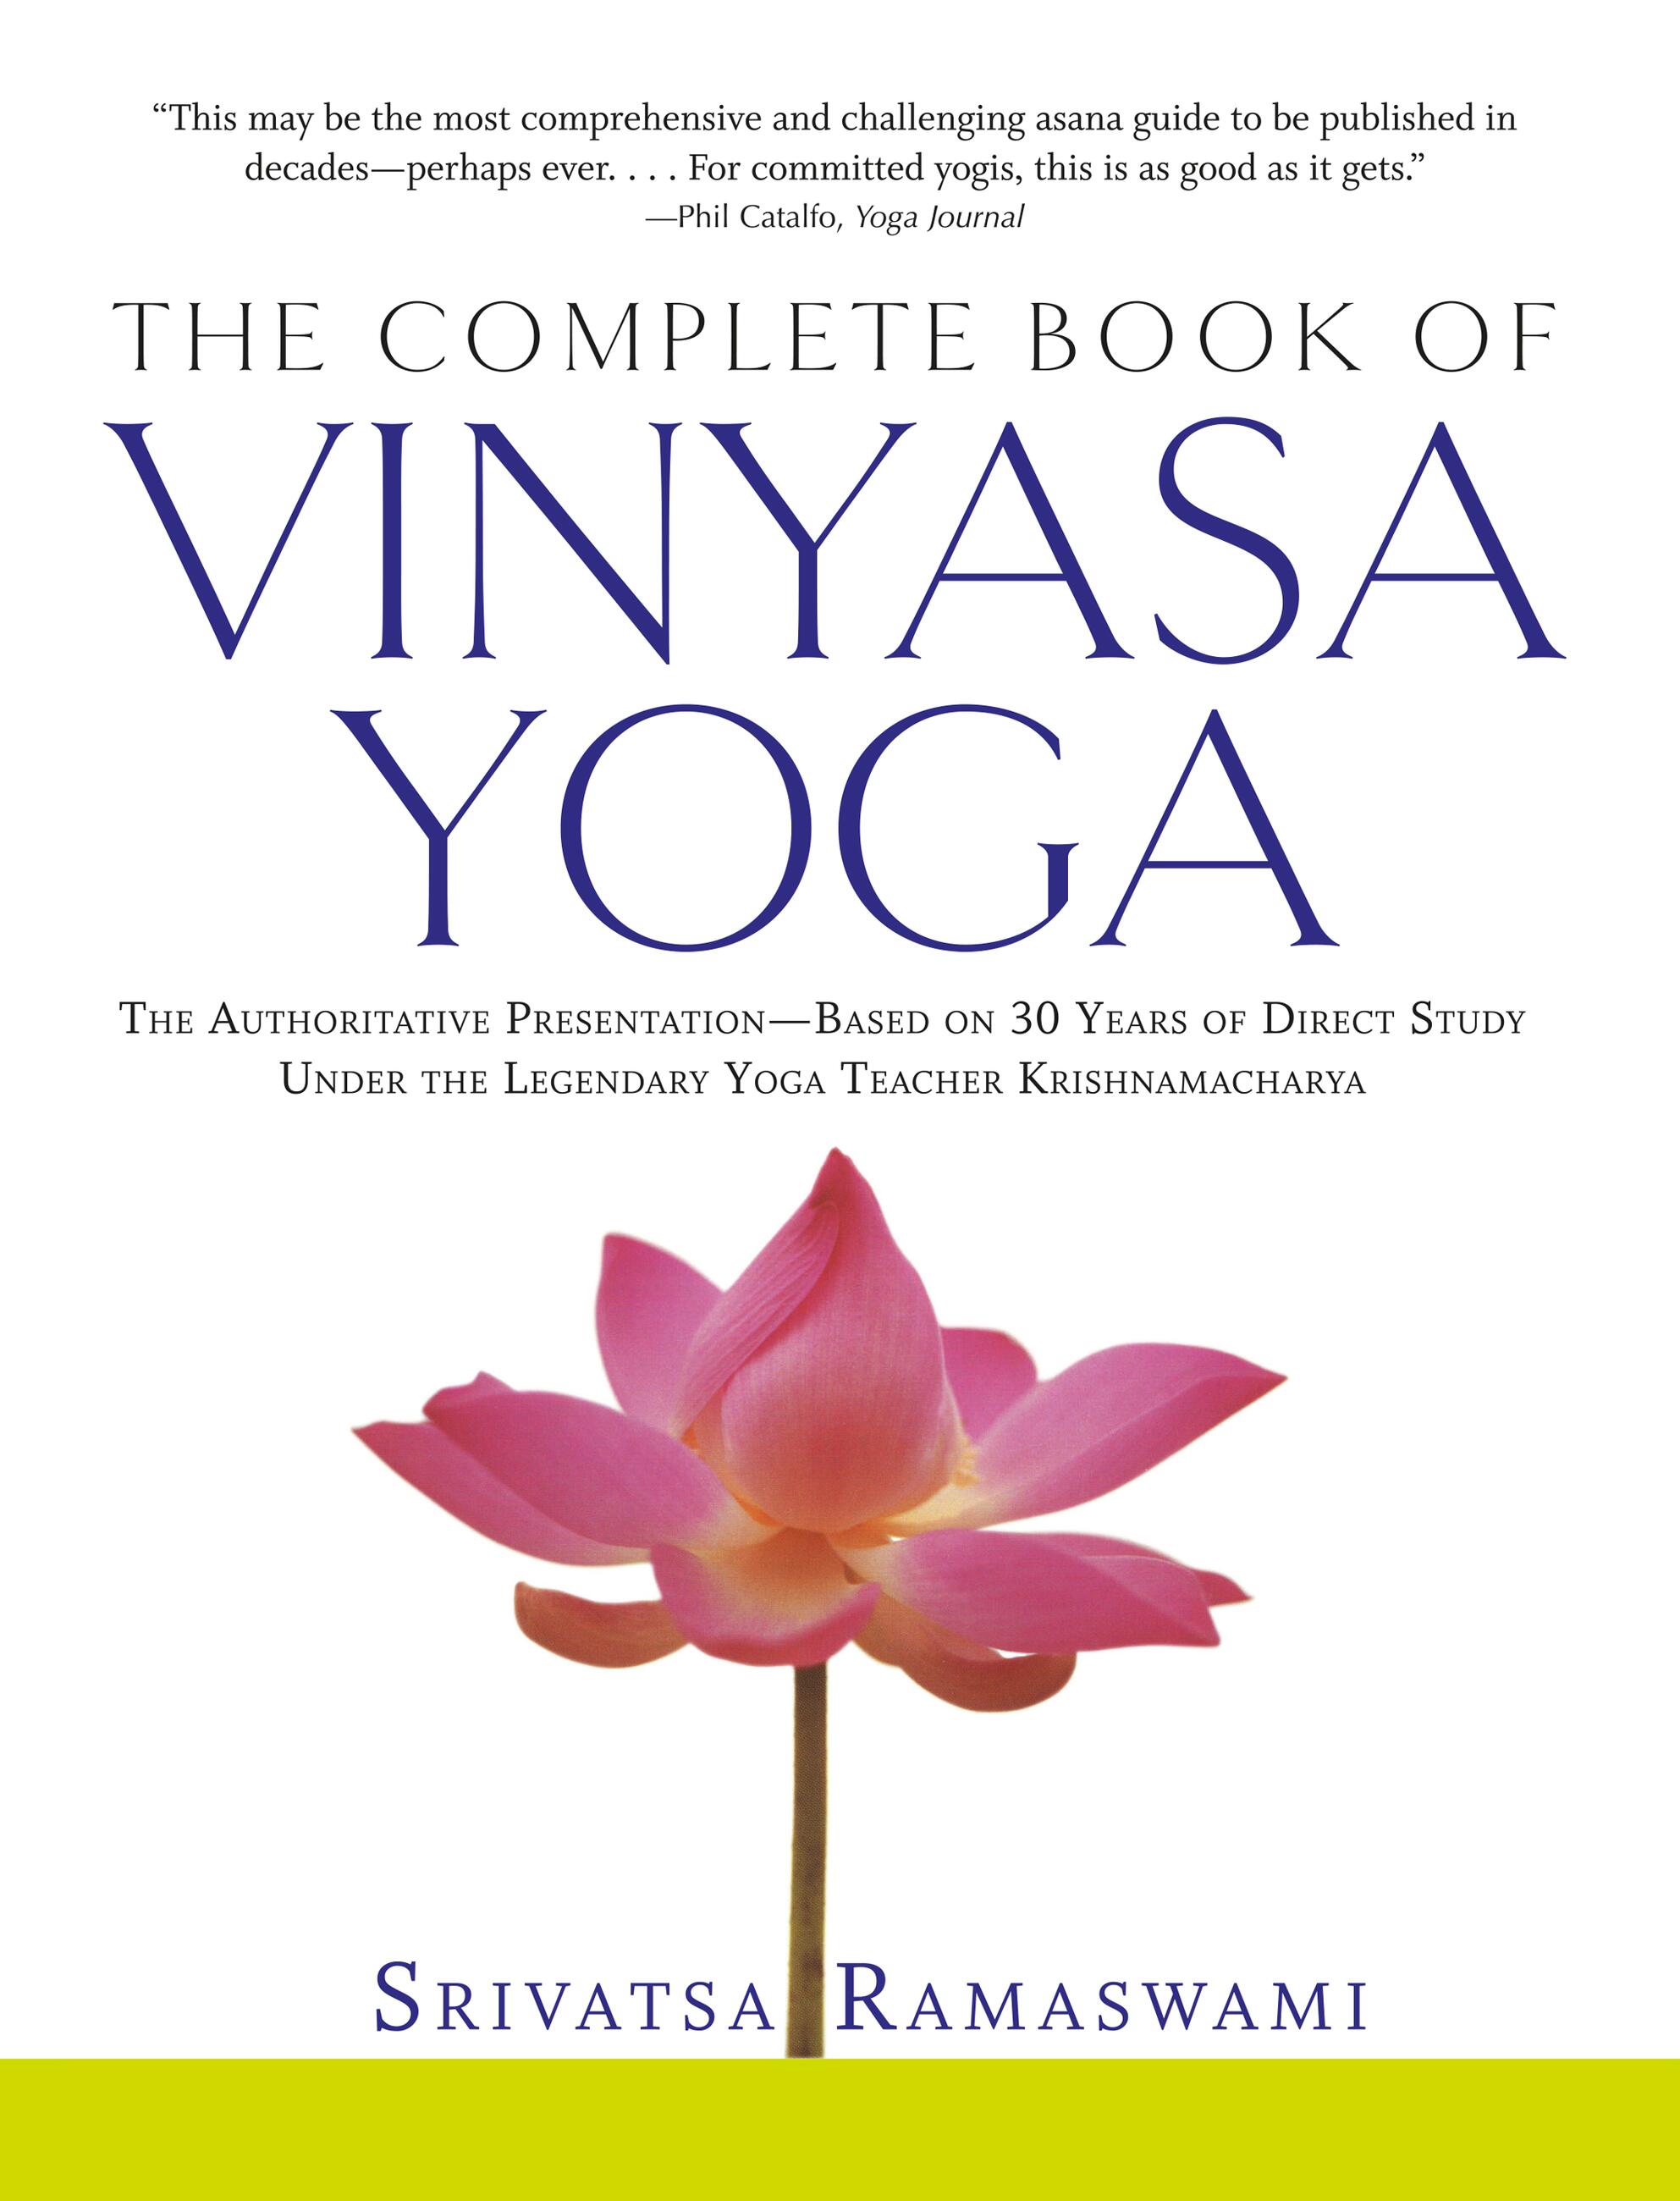 The Complete Book of Vinyasa Yoga by Srivatsa Ramaswami